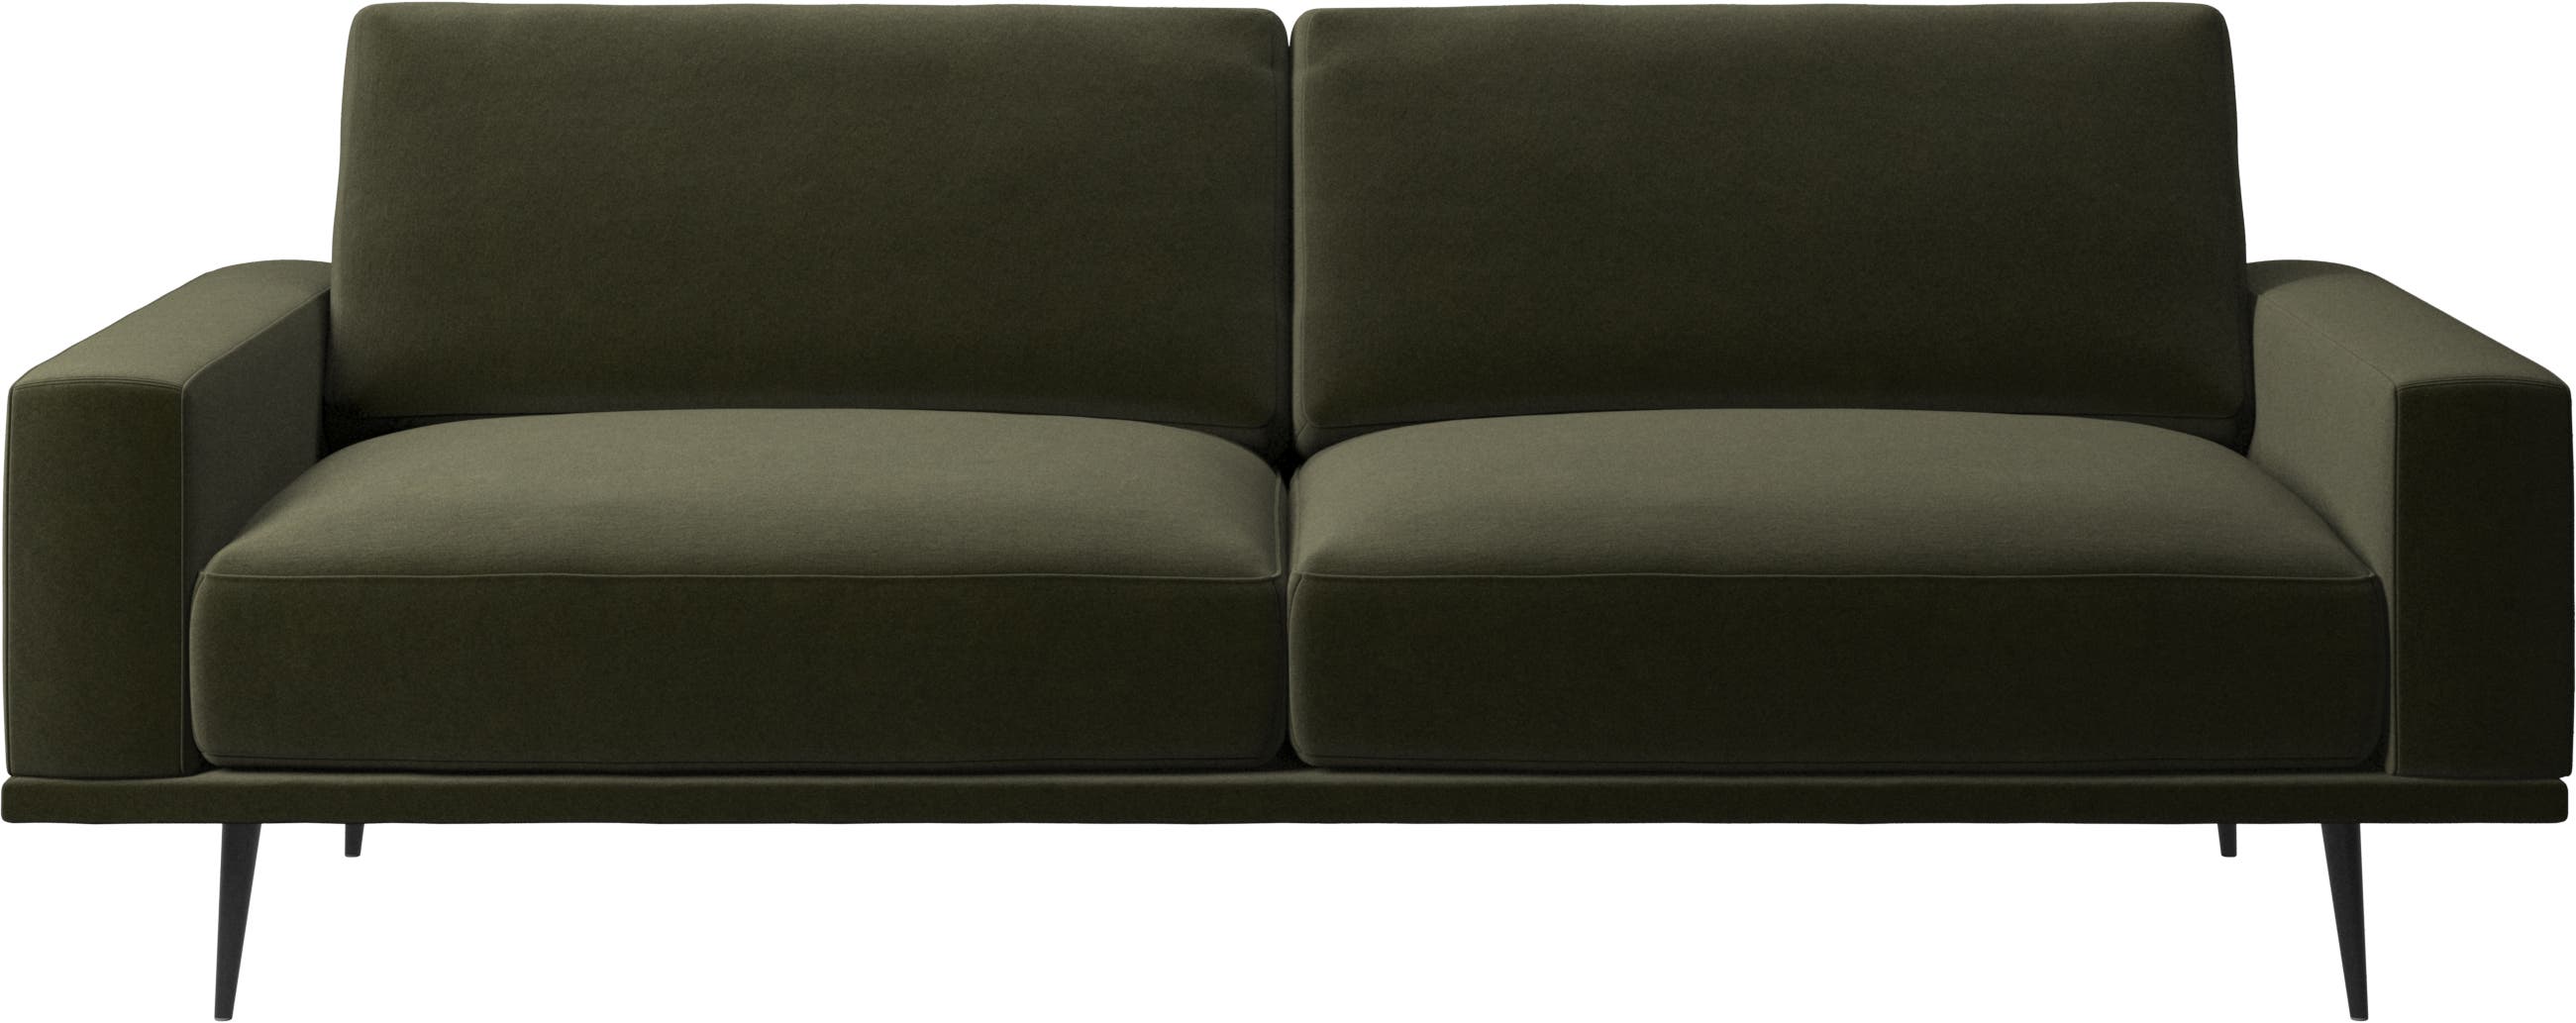 Carlton sofa